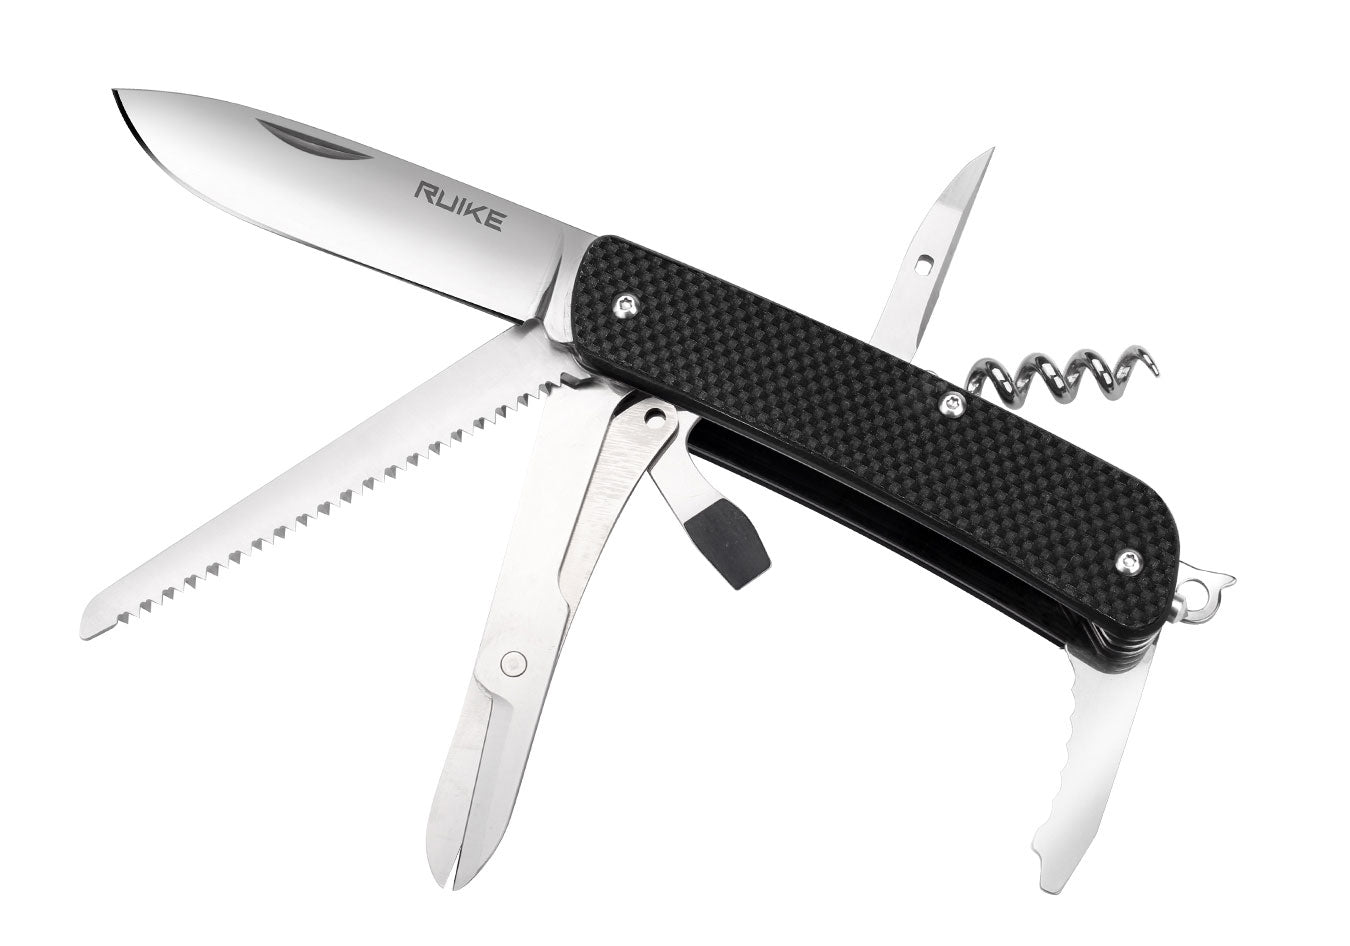 Ruike M42 Criterion Multifunction Knife – Black